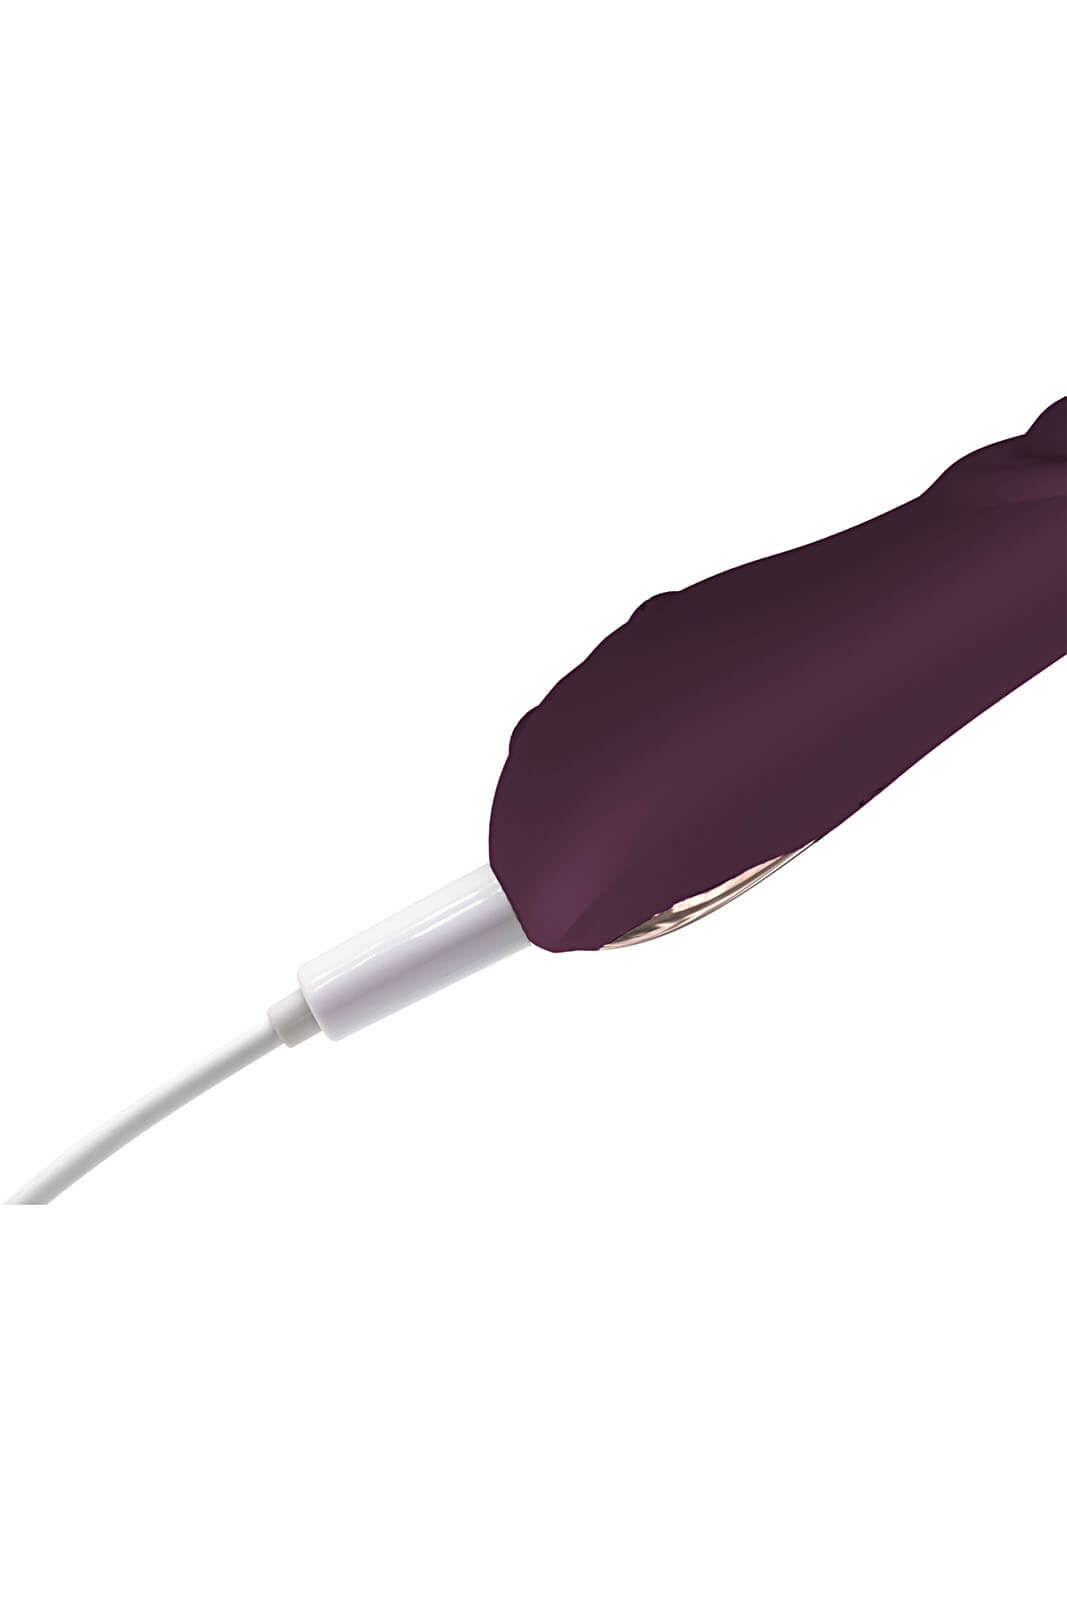 Dream Toys Essentials Tapping Power Vibe (Purple), pulzujúci vibrátor